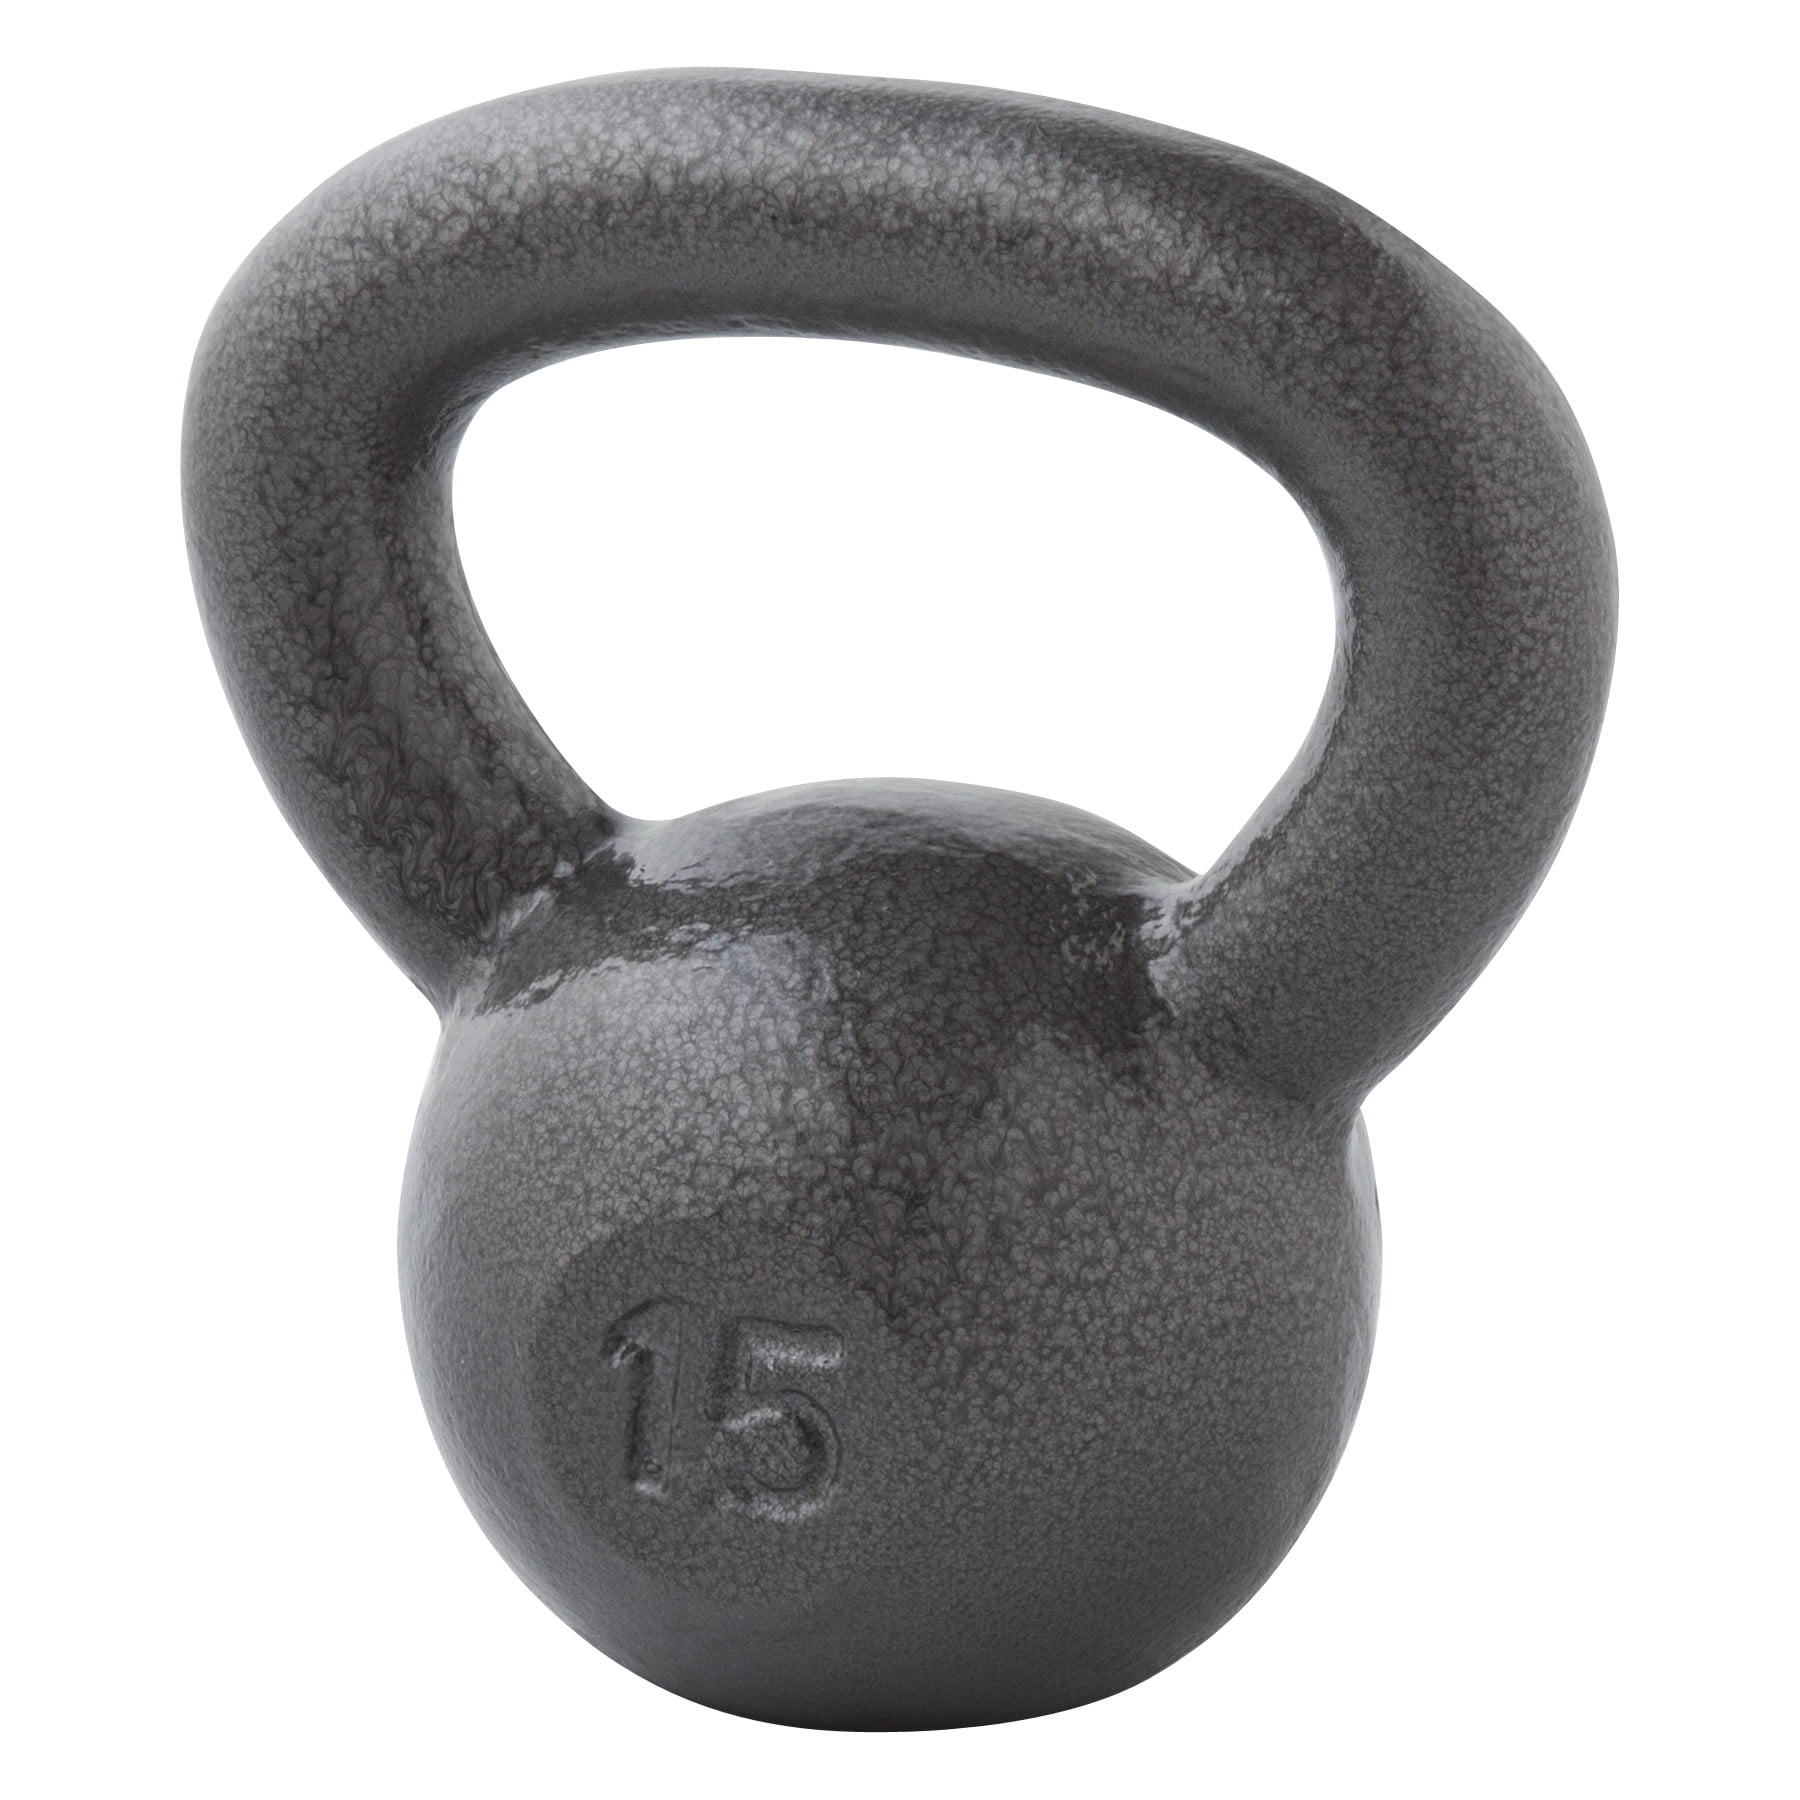 Weider 25 Pound Kettle Bell Workout Dumbbell Weights Cast Iron 